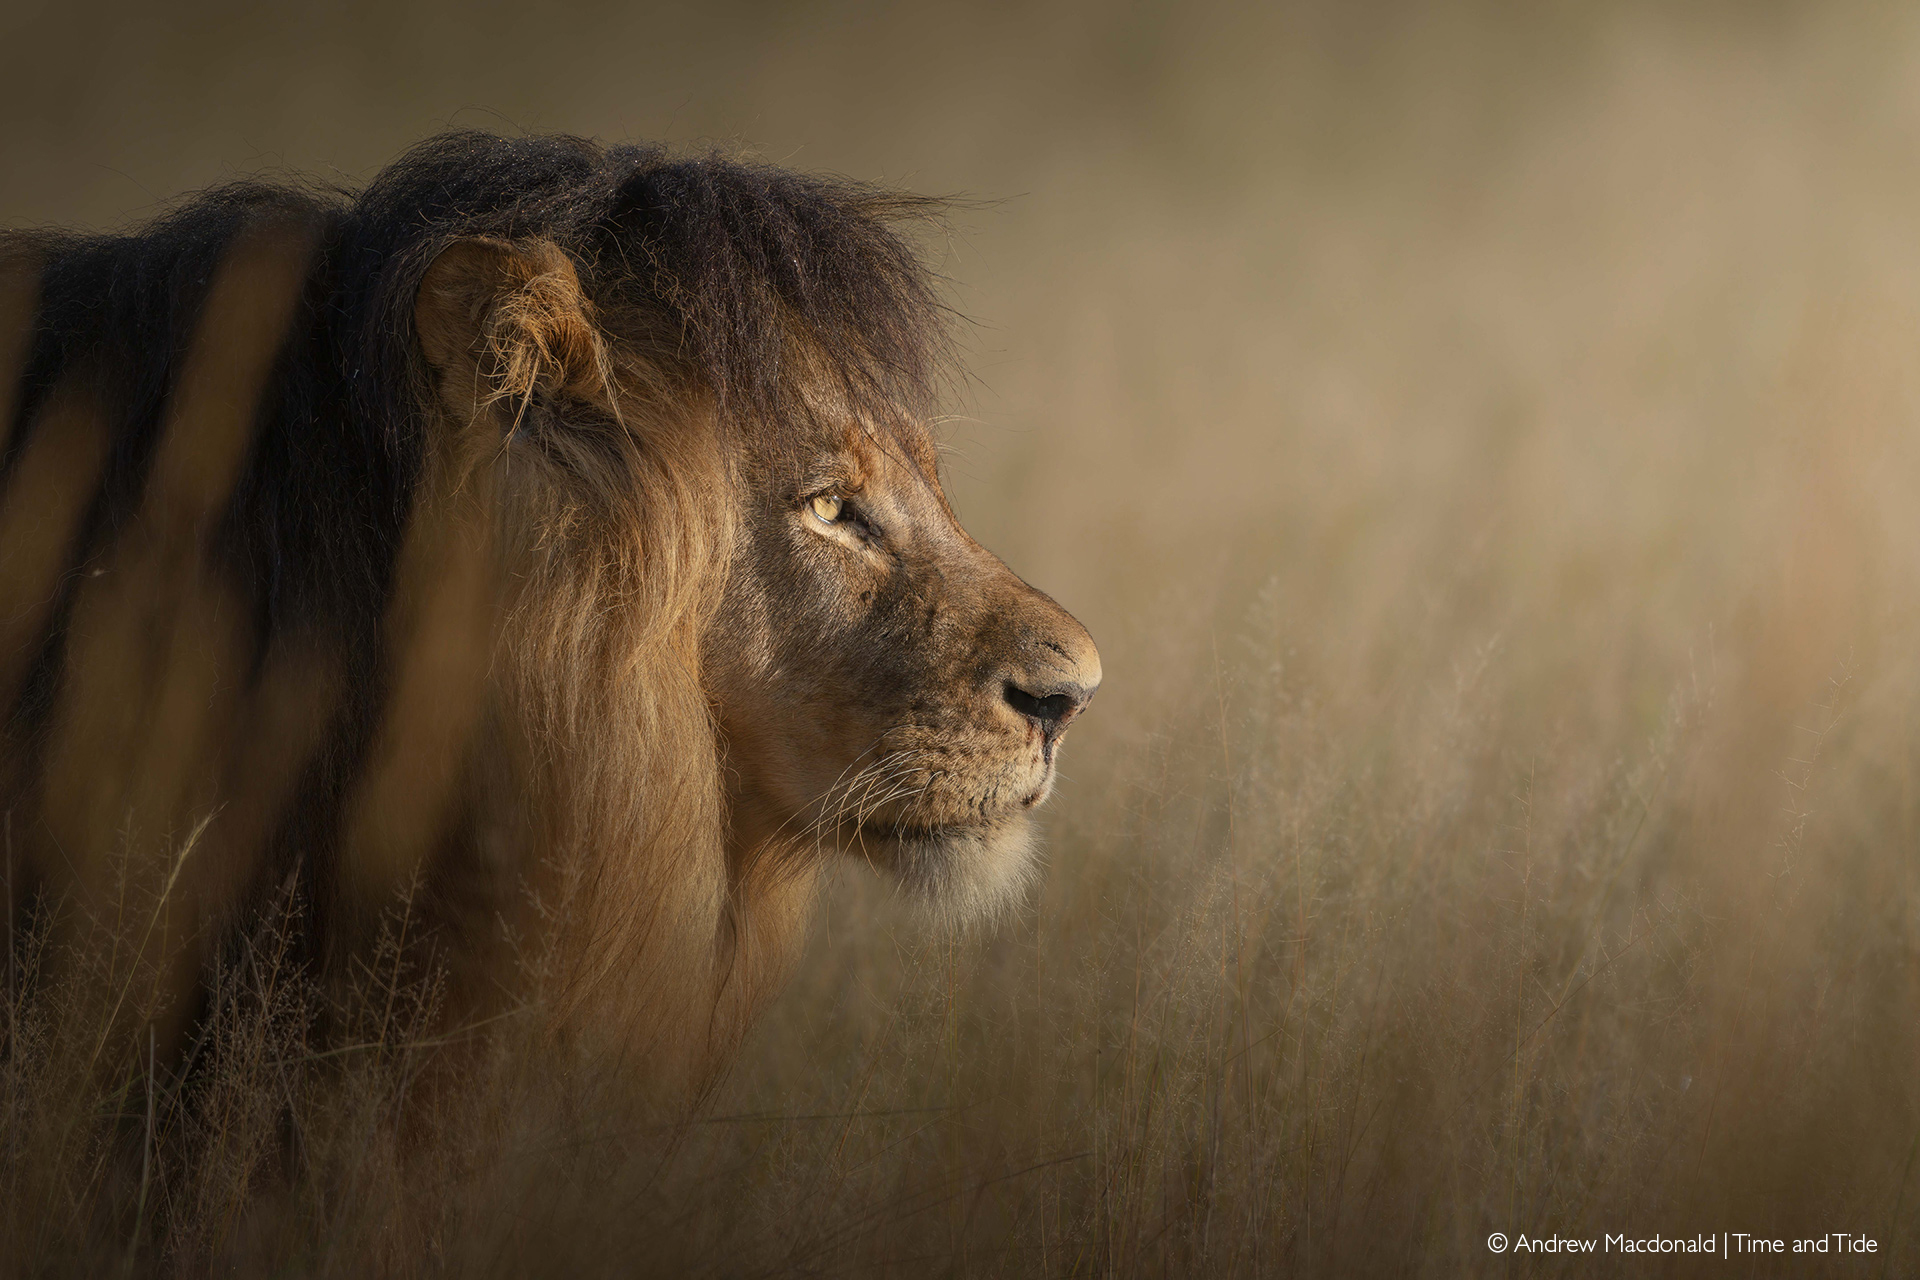 african wild lions